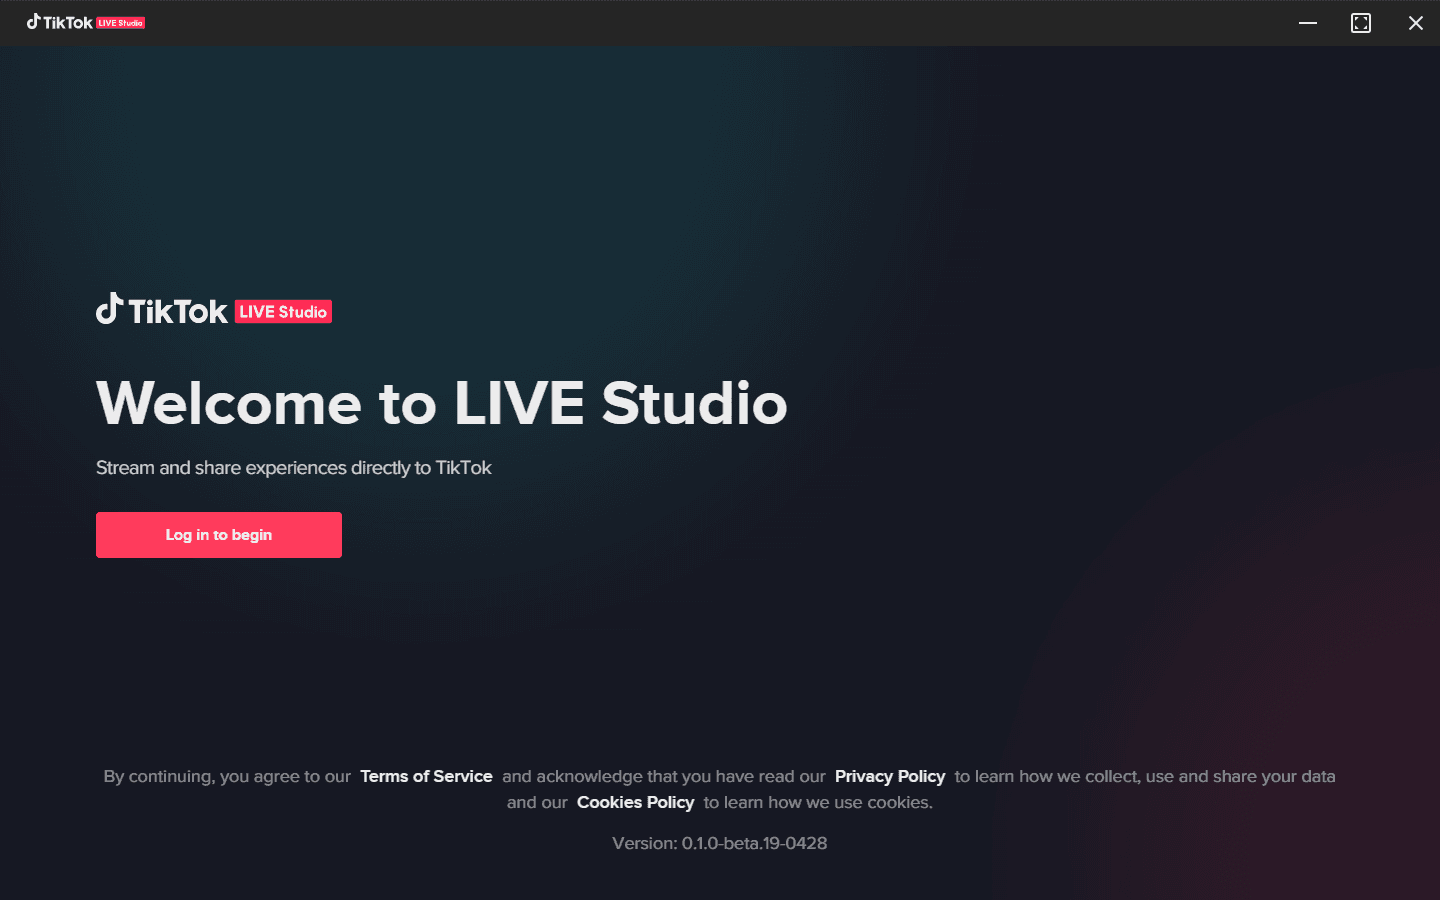 TikTok LIVE Studio Guideline